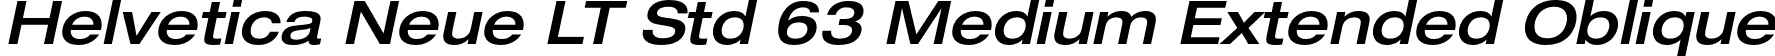 Helvetica Neue LT Std 63 Medium Extended Oblique font - HelveticaNeueLTStd-MdExO.otf